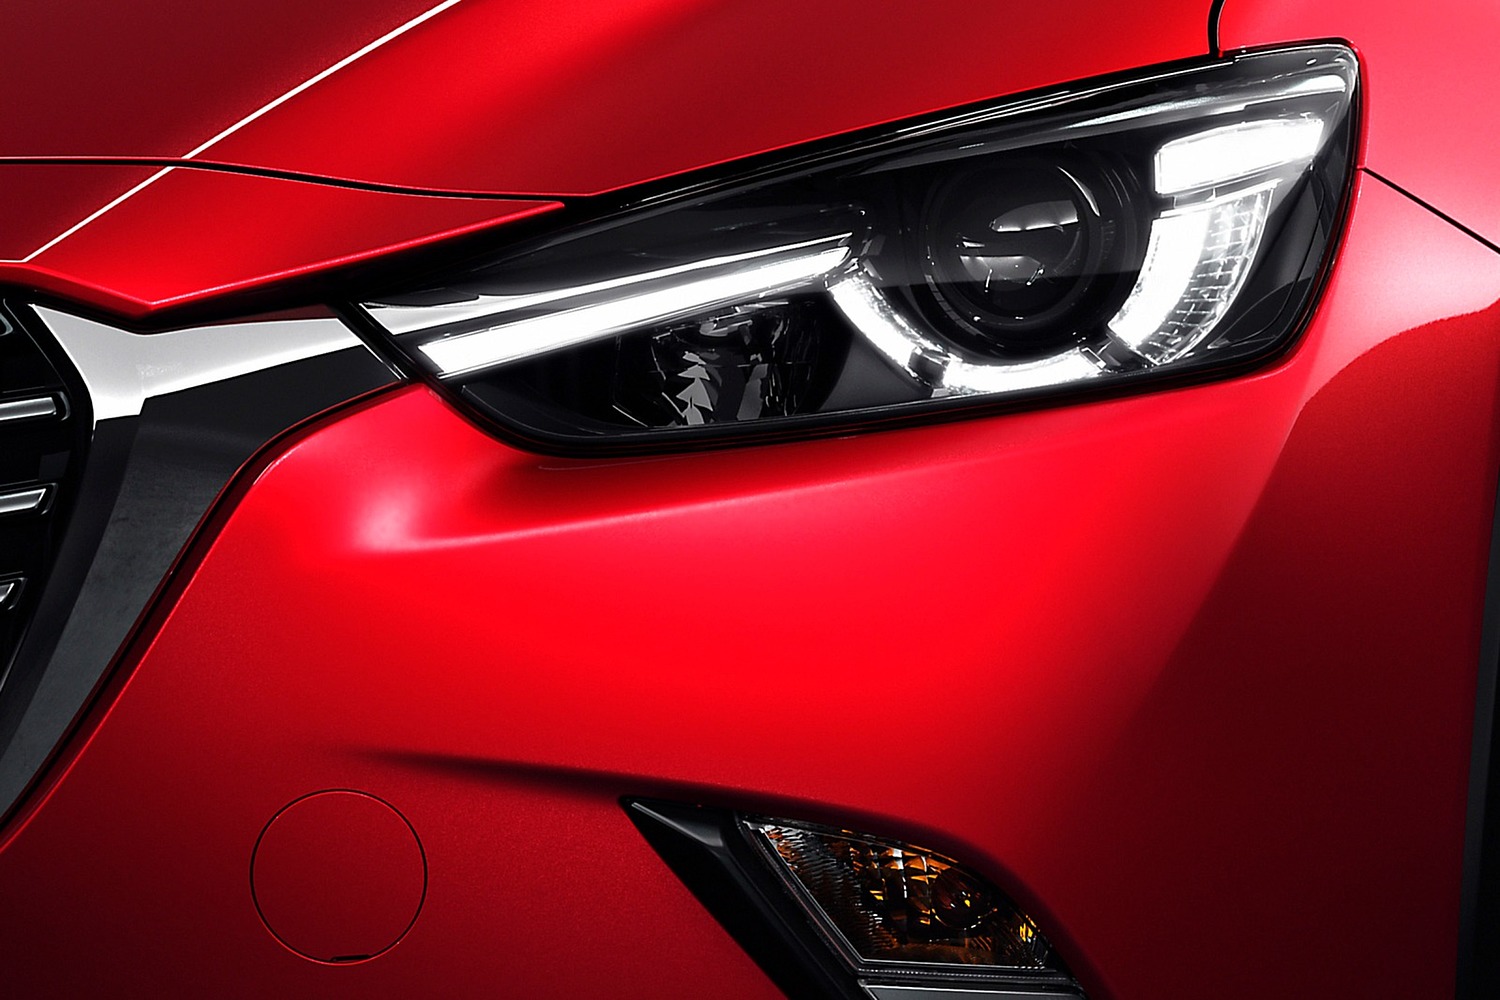 Mazda CX-3 Grand Touring 4dr SUV Headlamp Detail (2016 model year shown)